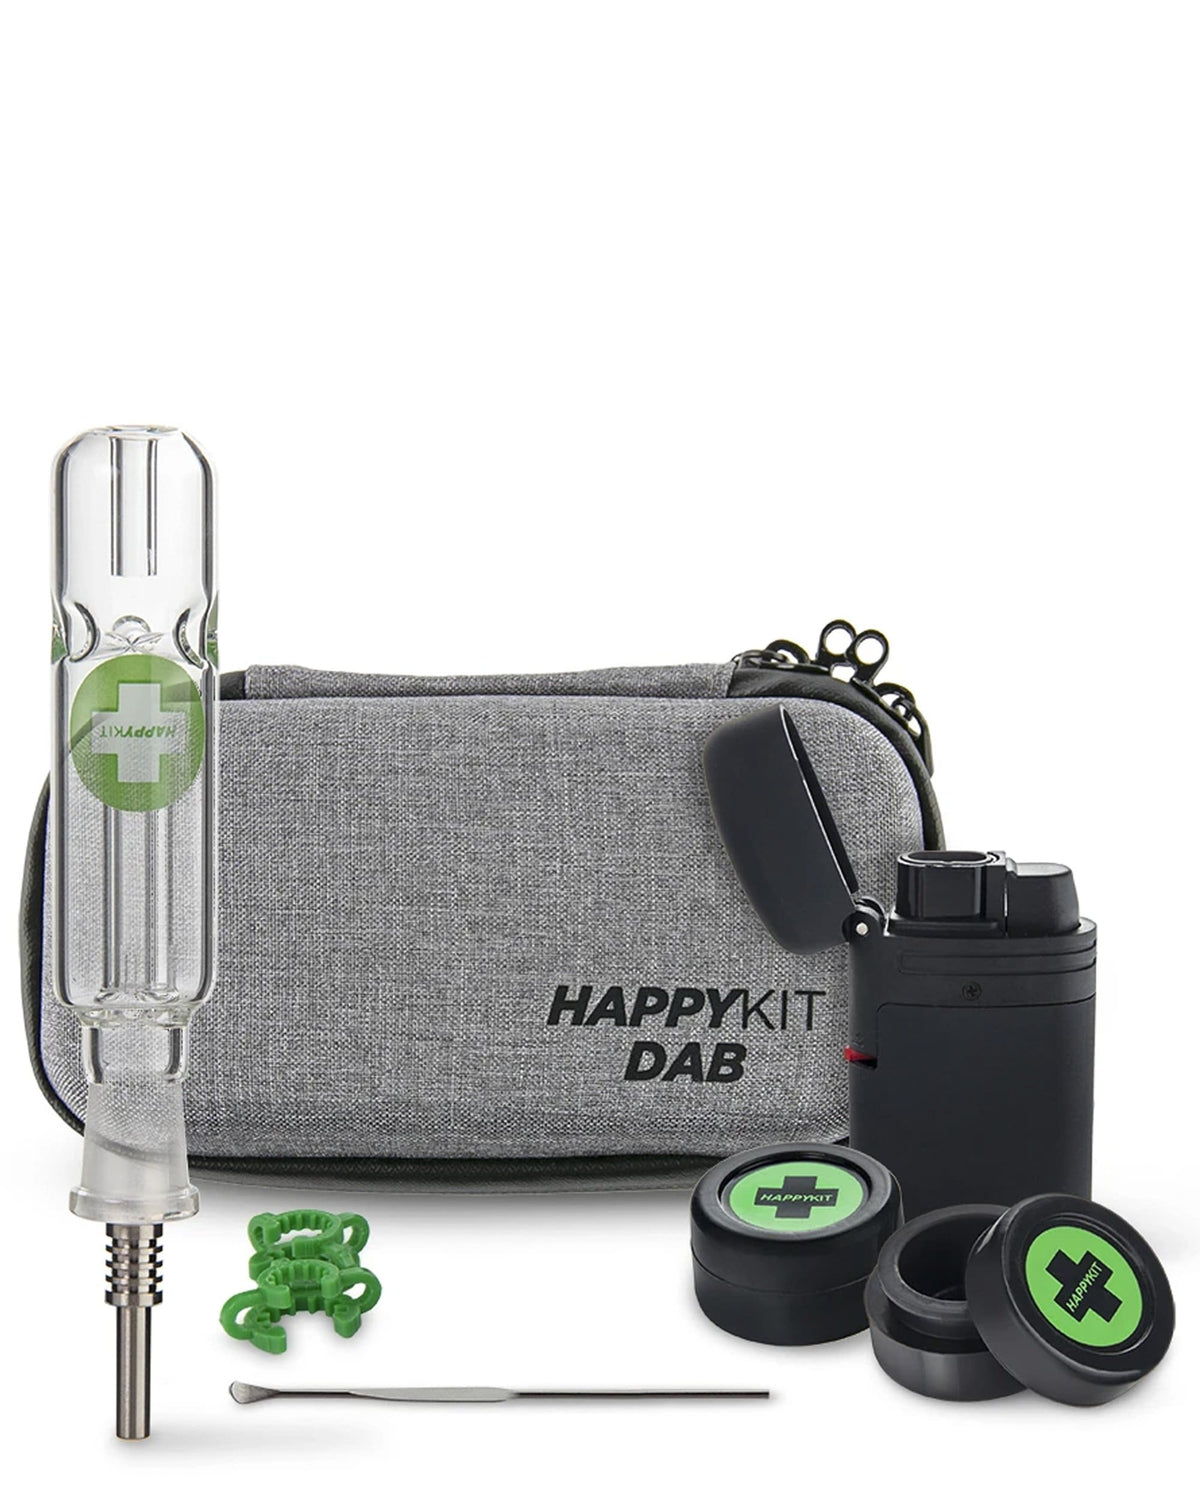 The Happy Dab kit